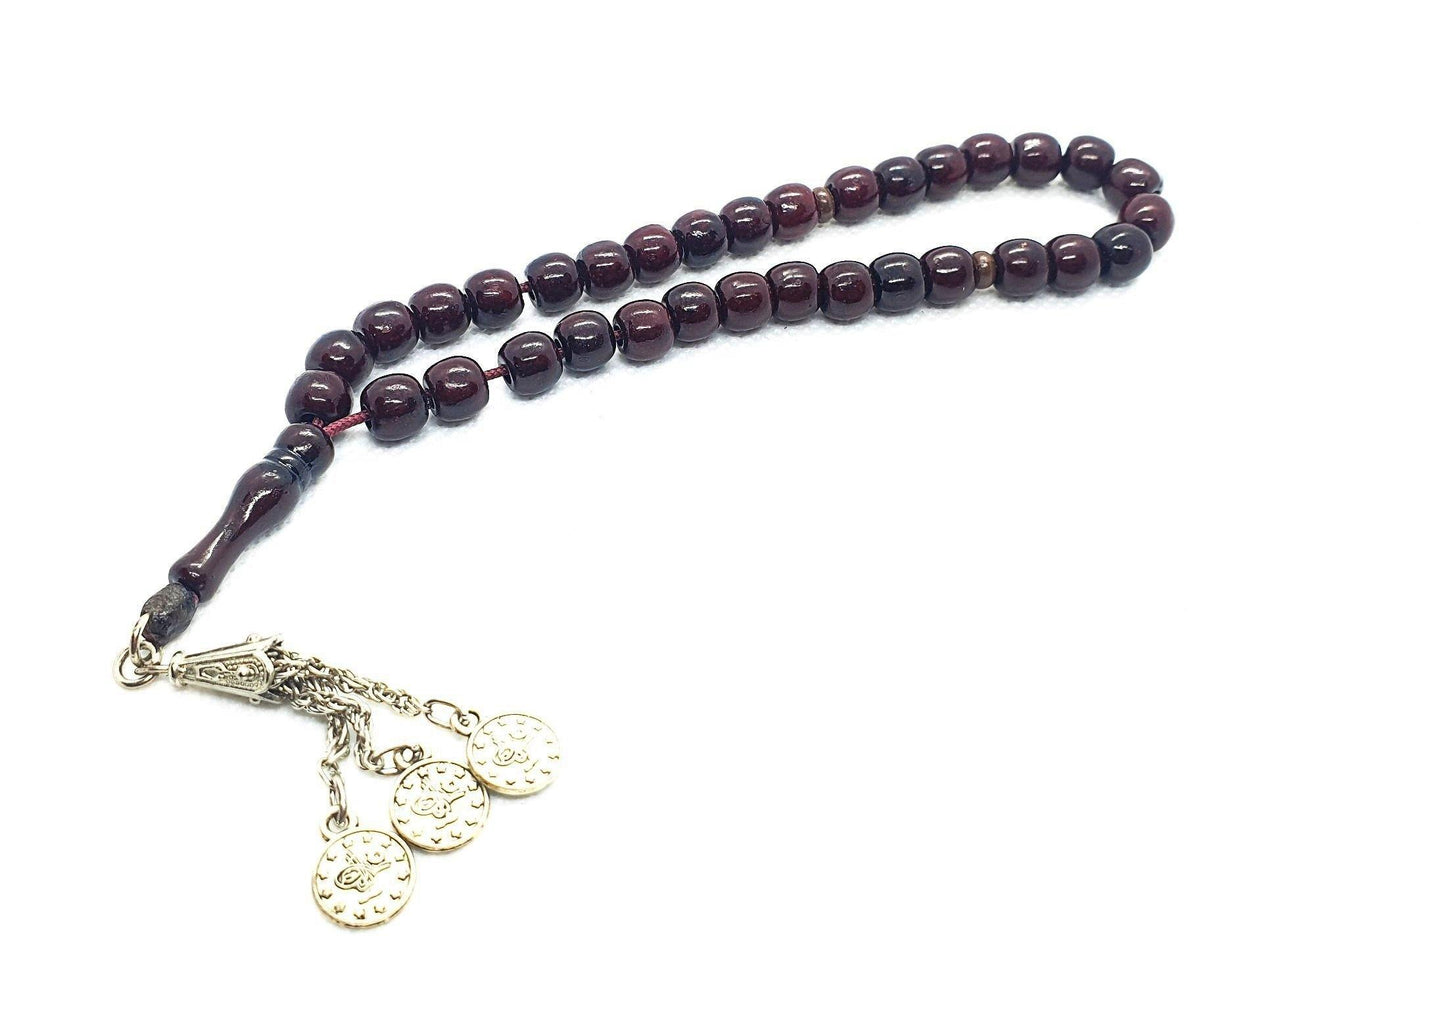 Aged Master Craft Wooden Prayer Beads